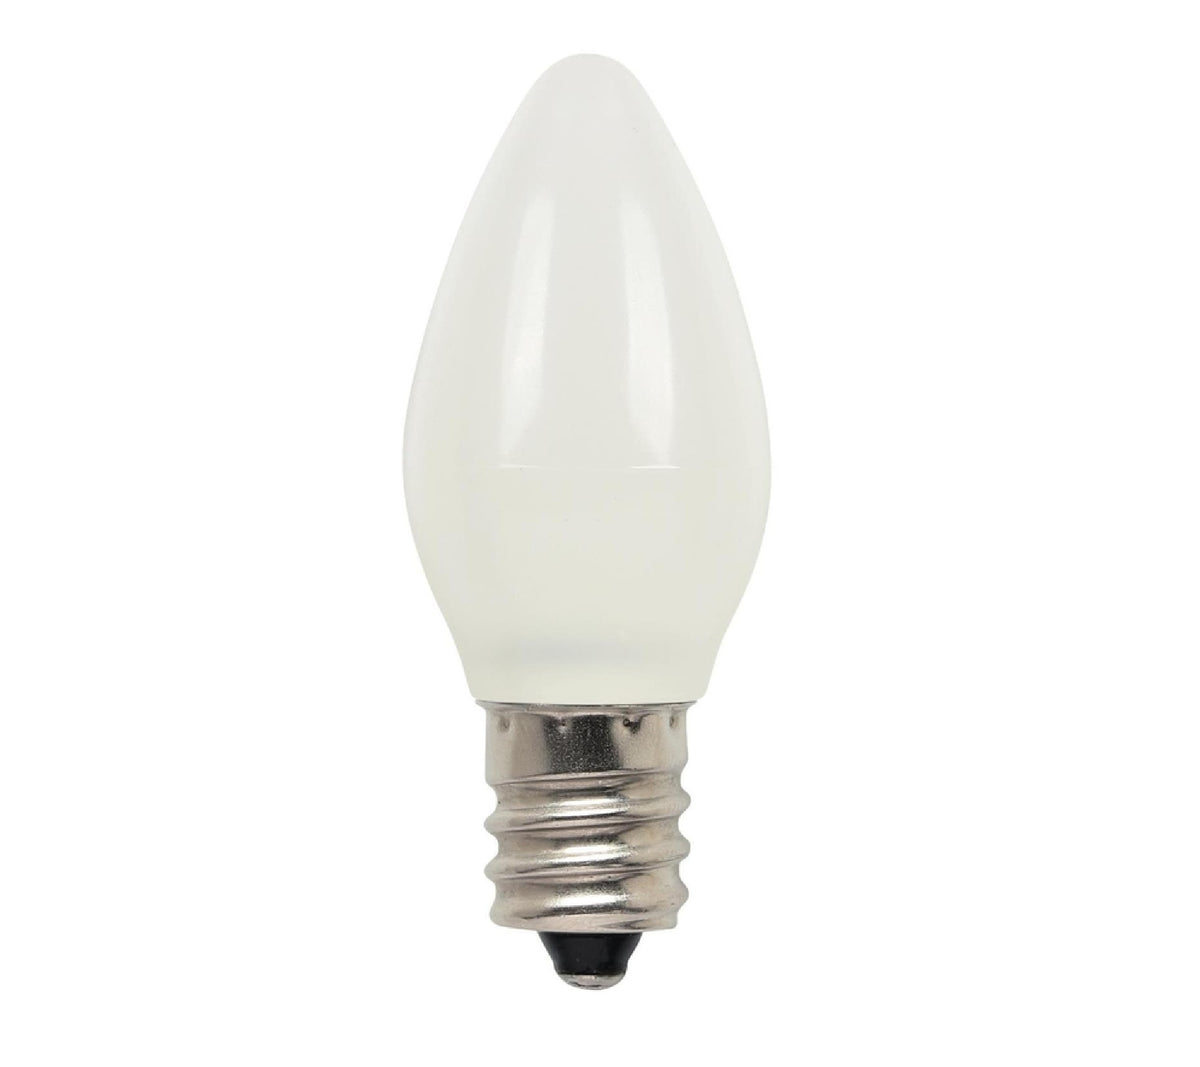 Westinghouse 0510900 7W Equivalent Warm White C7 Night Light LED Light Bulb, 50 lumens